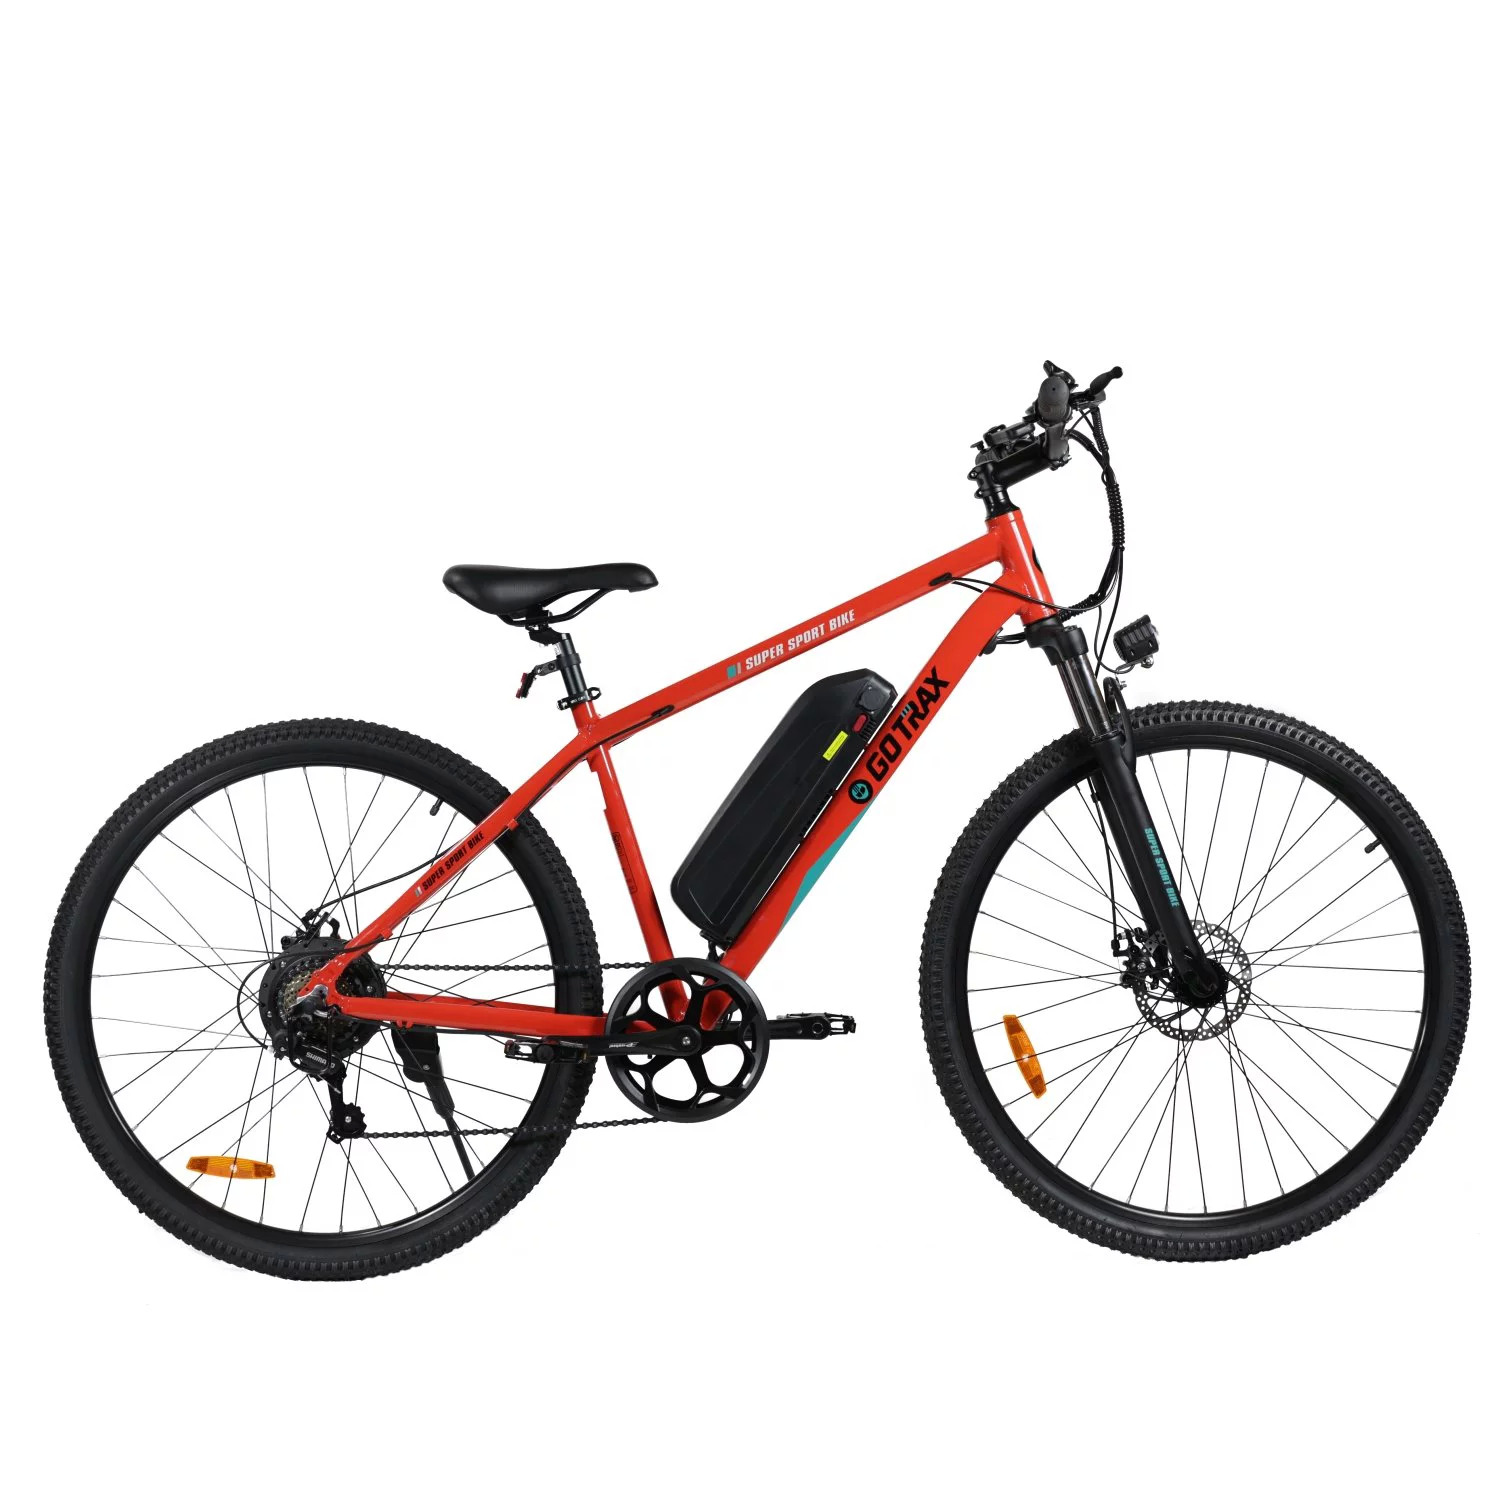 29" GOTRAX 500W Traveler Electric Bicycle (Orange) $648 + Free Shipping